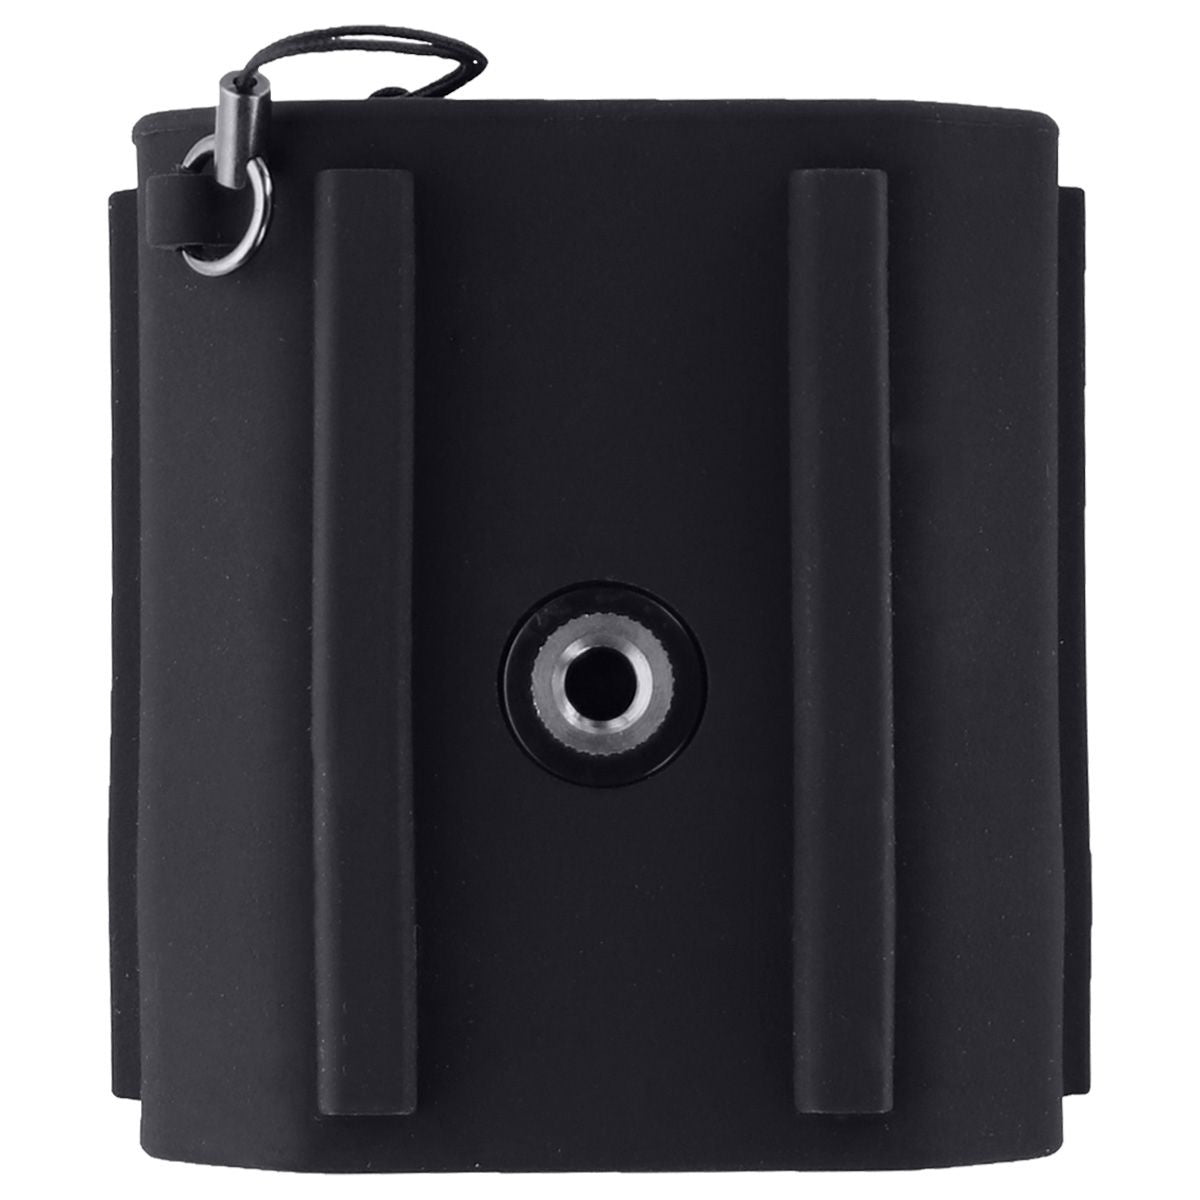 Ecoxgear Ecopebble Rugged and Waterproof Wireless Bluetooth Speaker - Black Cell Phone - Audio Docks & Speakers ECOXGEAR    - Simple Cell Bulk Wholesale Pricing - USA Seller